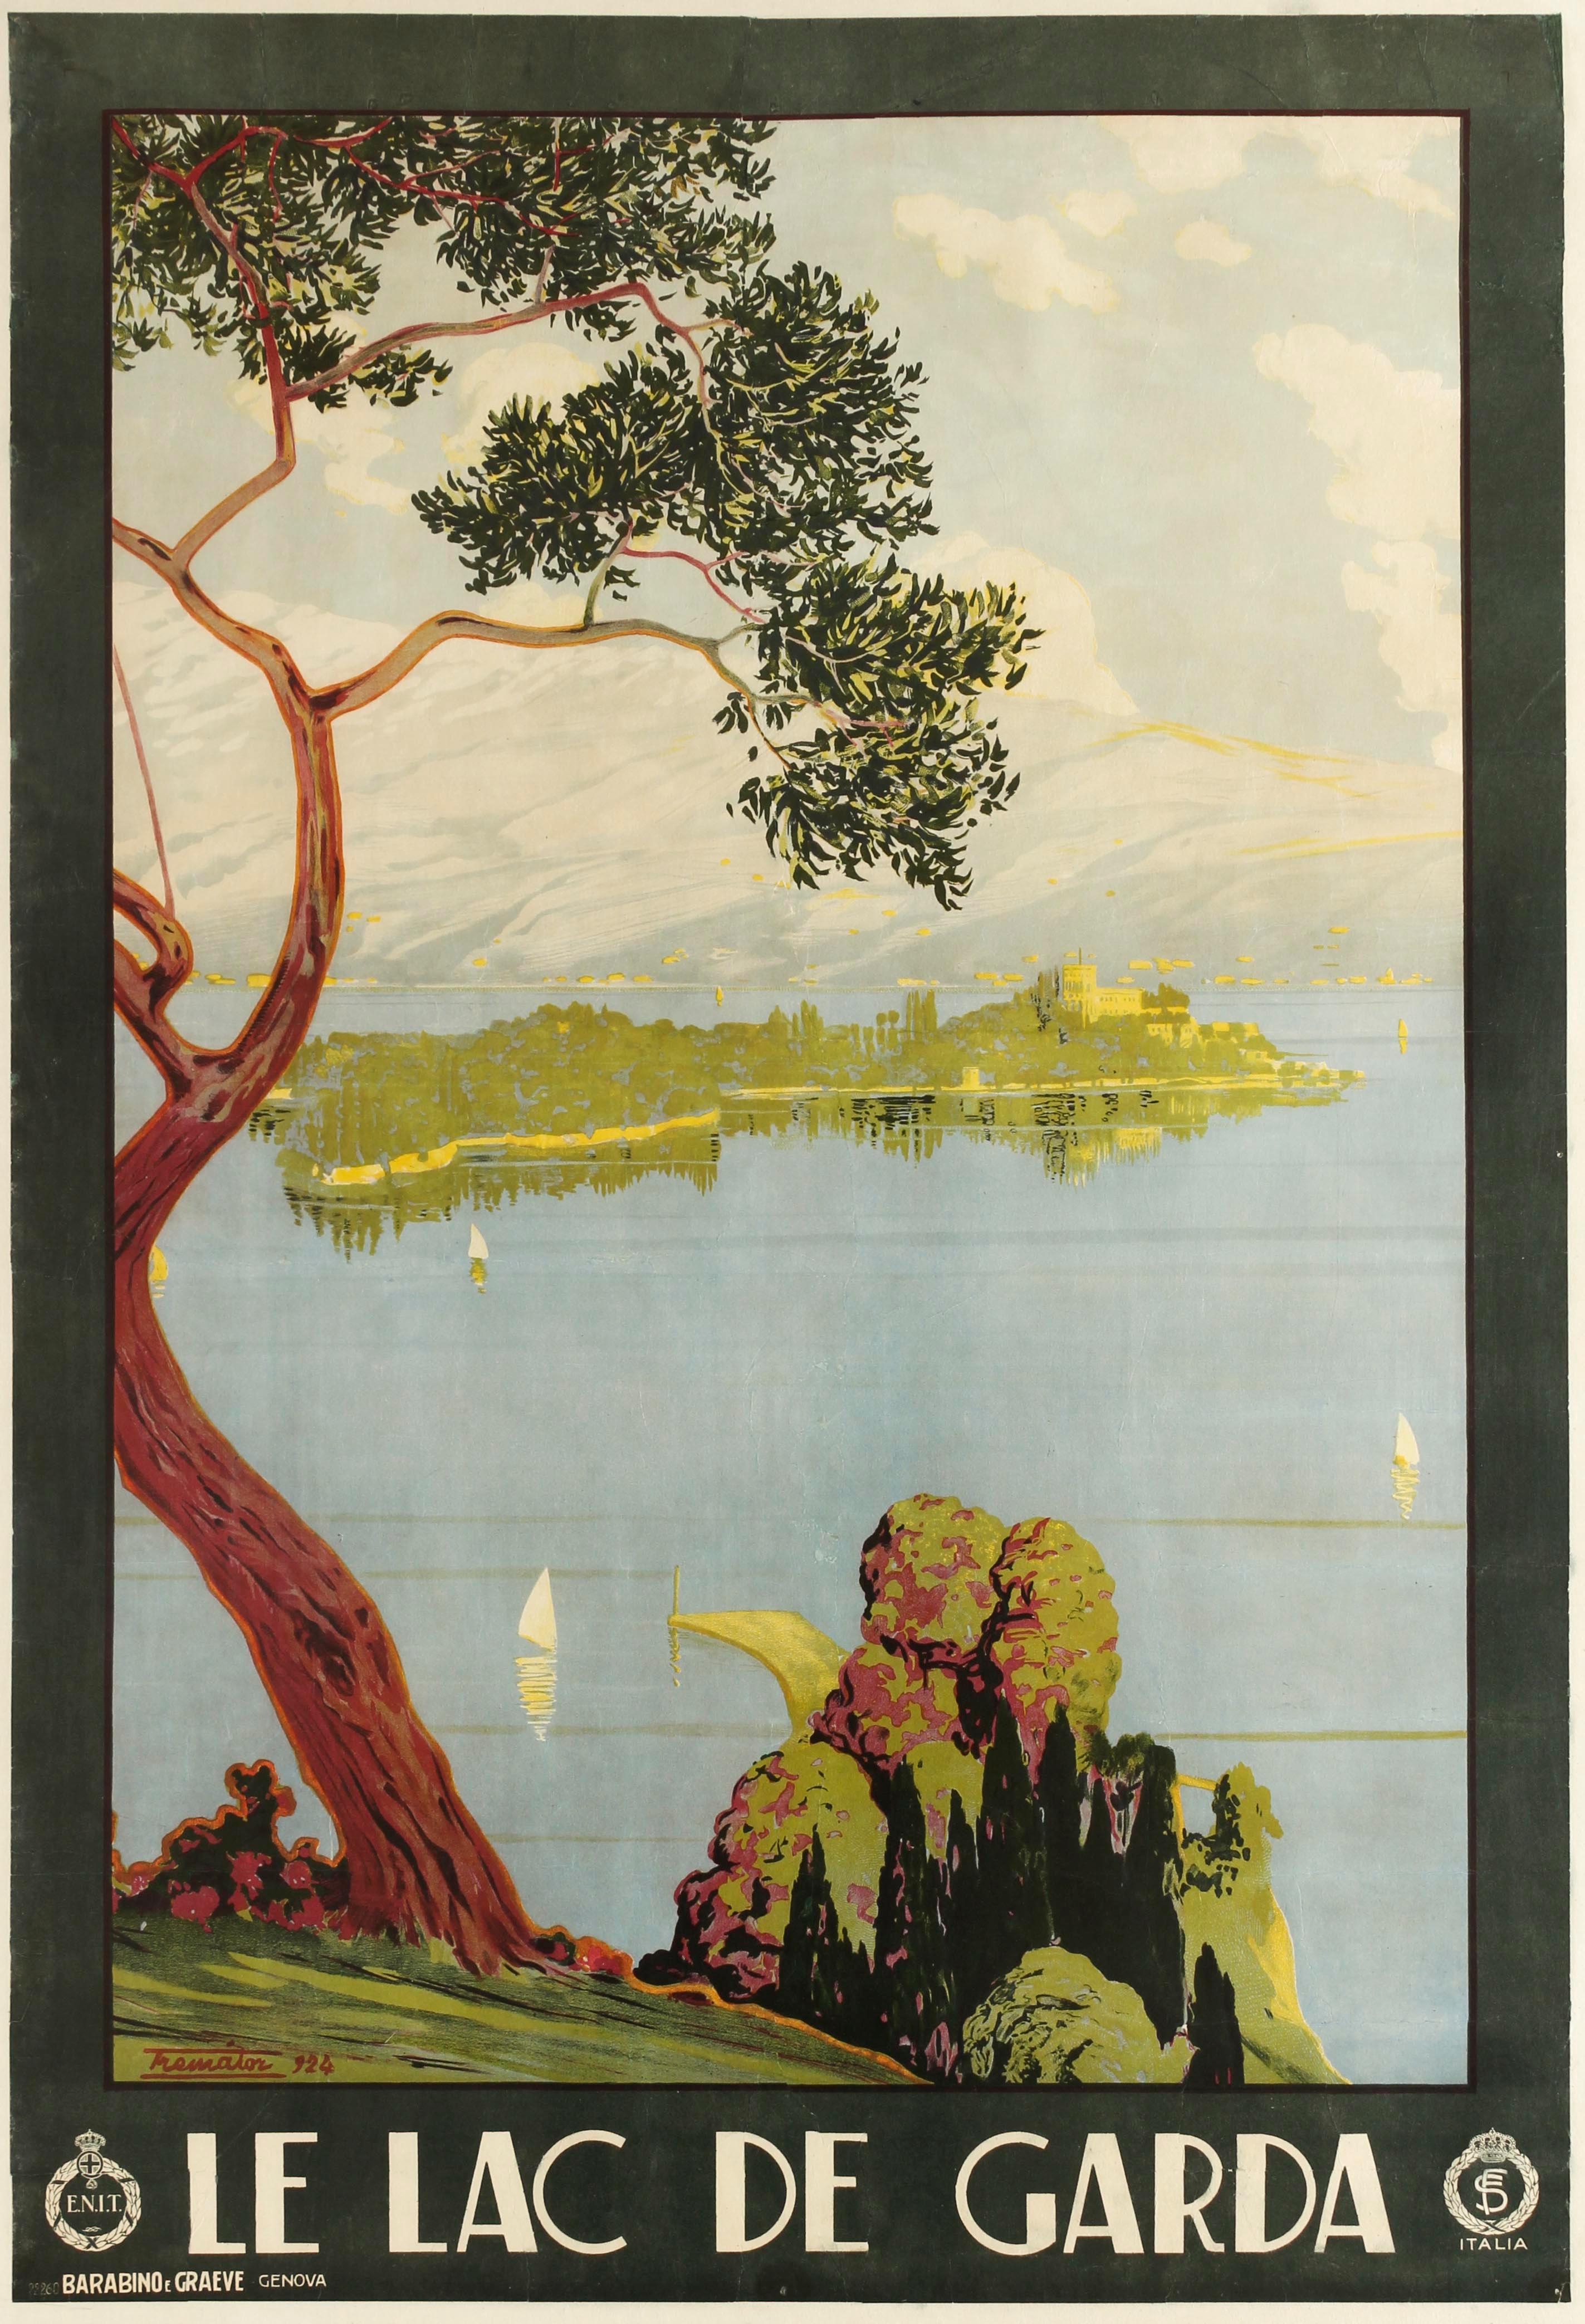 Severino Tremator Print - Original Vintage Poster For Le Lac De Garda ENIT Travel Sailing Italy Lake Garda